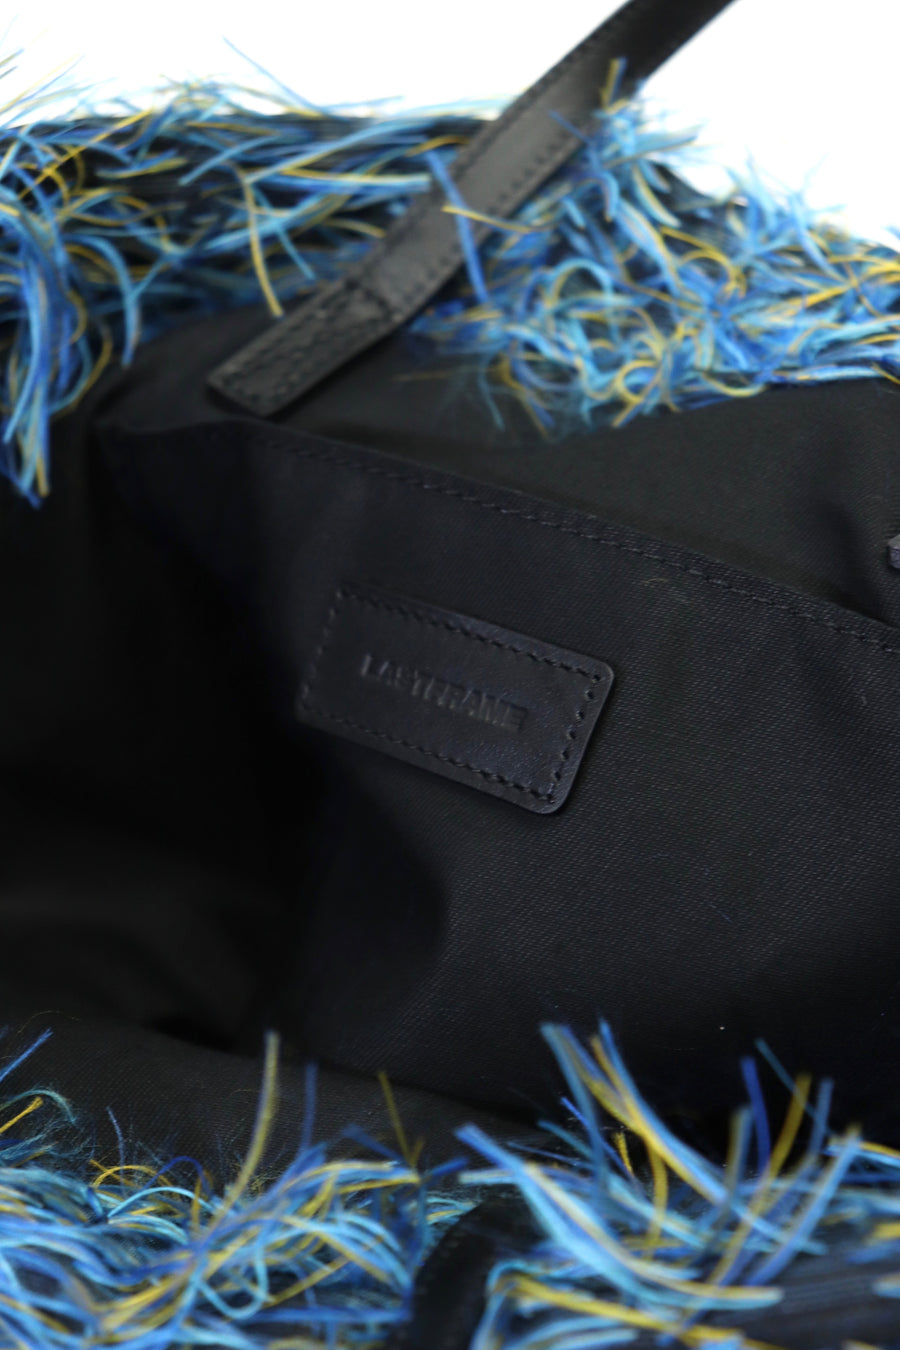 LASTFRAME  SHAGGY KINCHAKU BAG SMALL(BLUE)